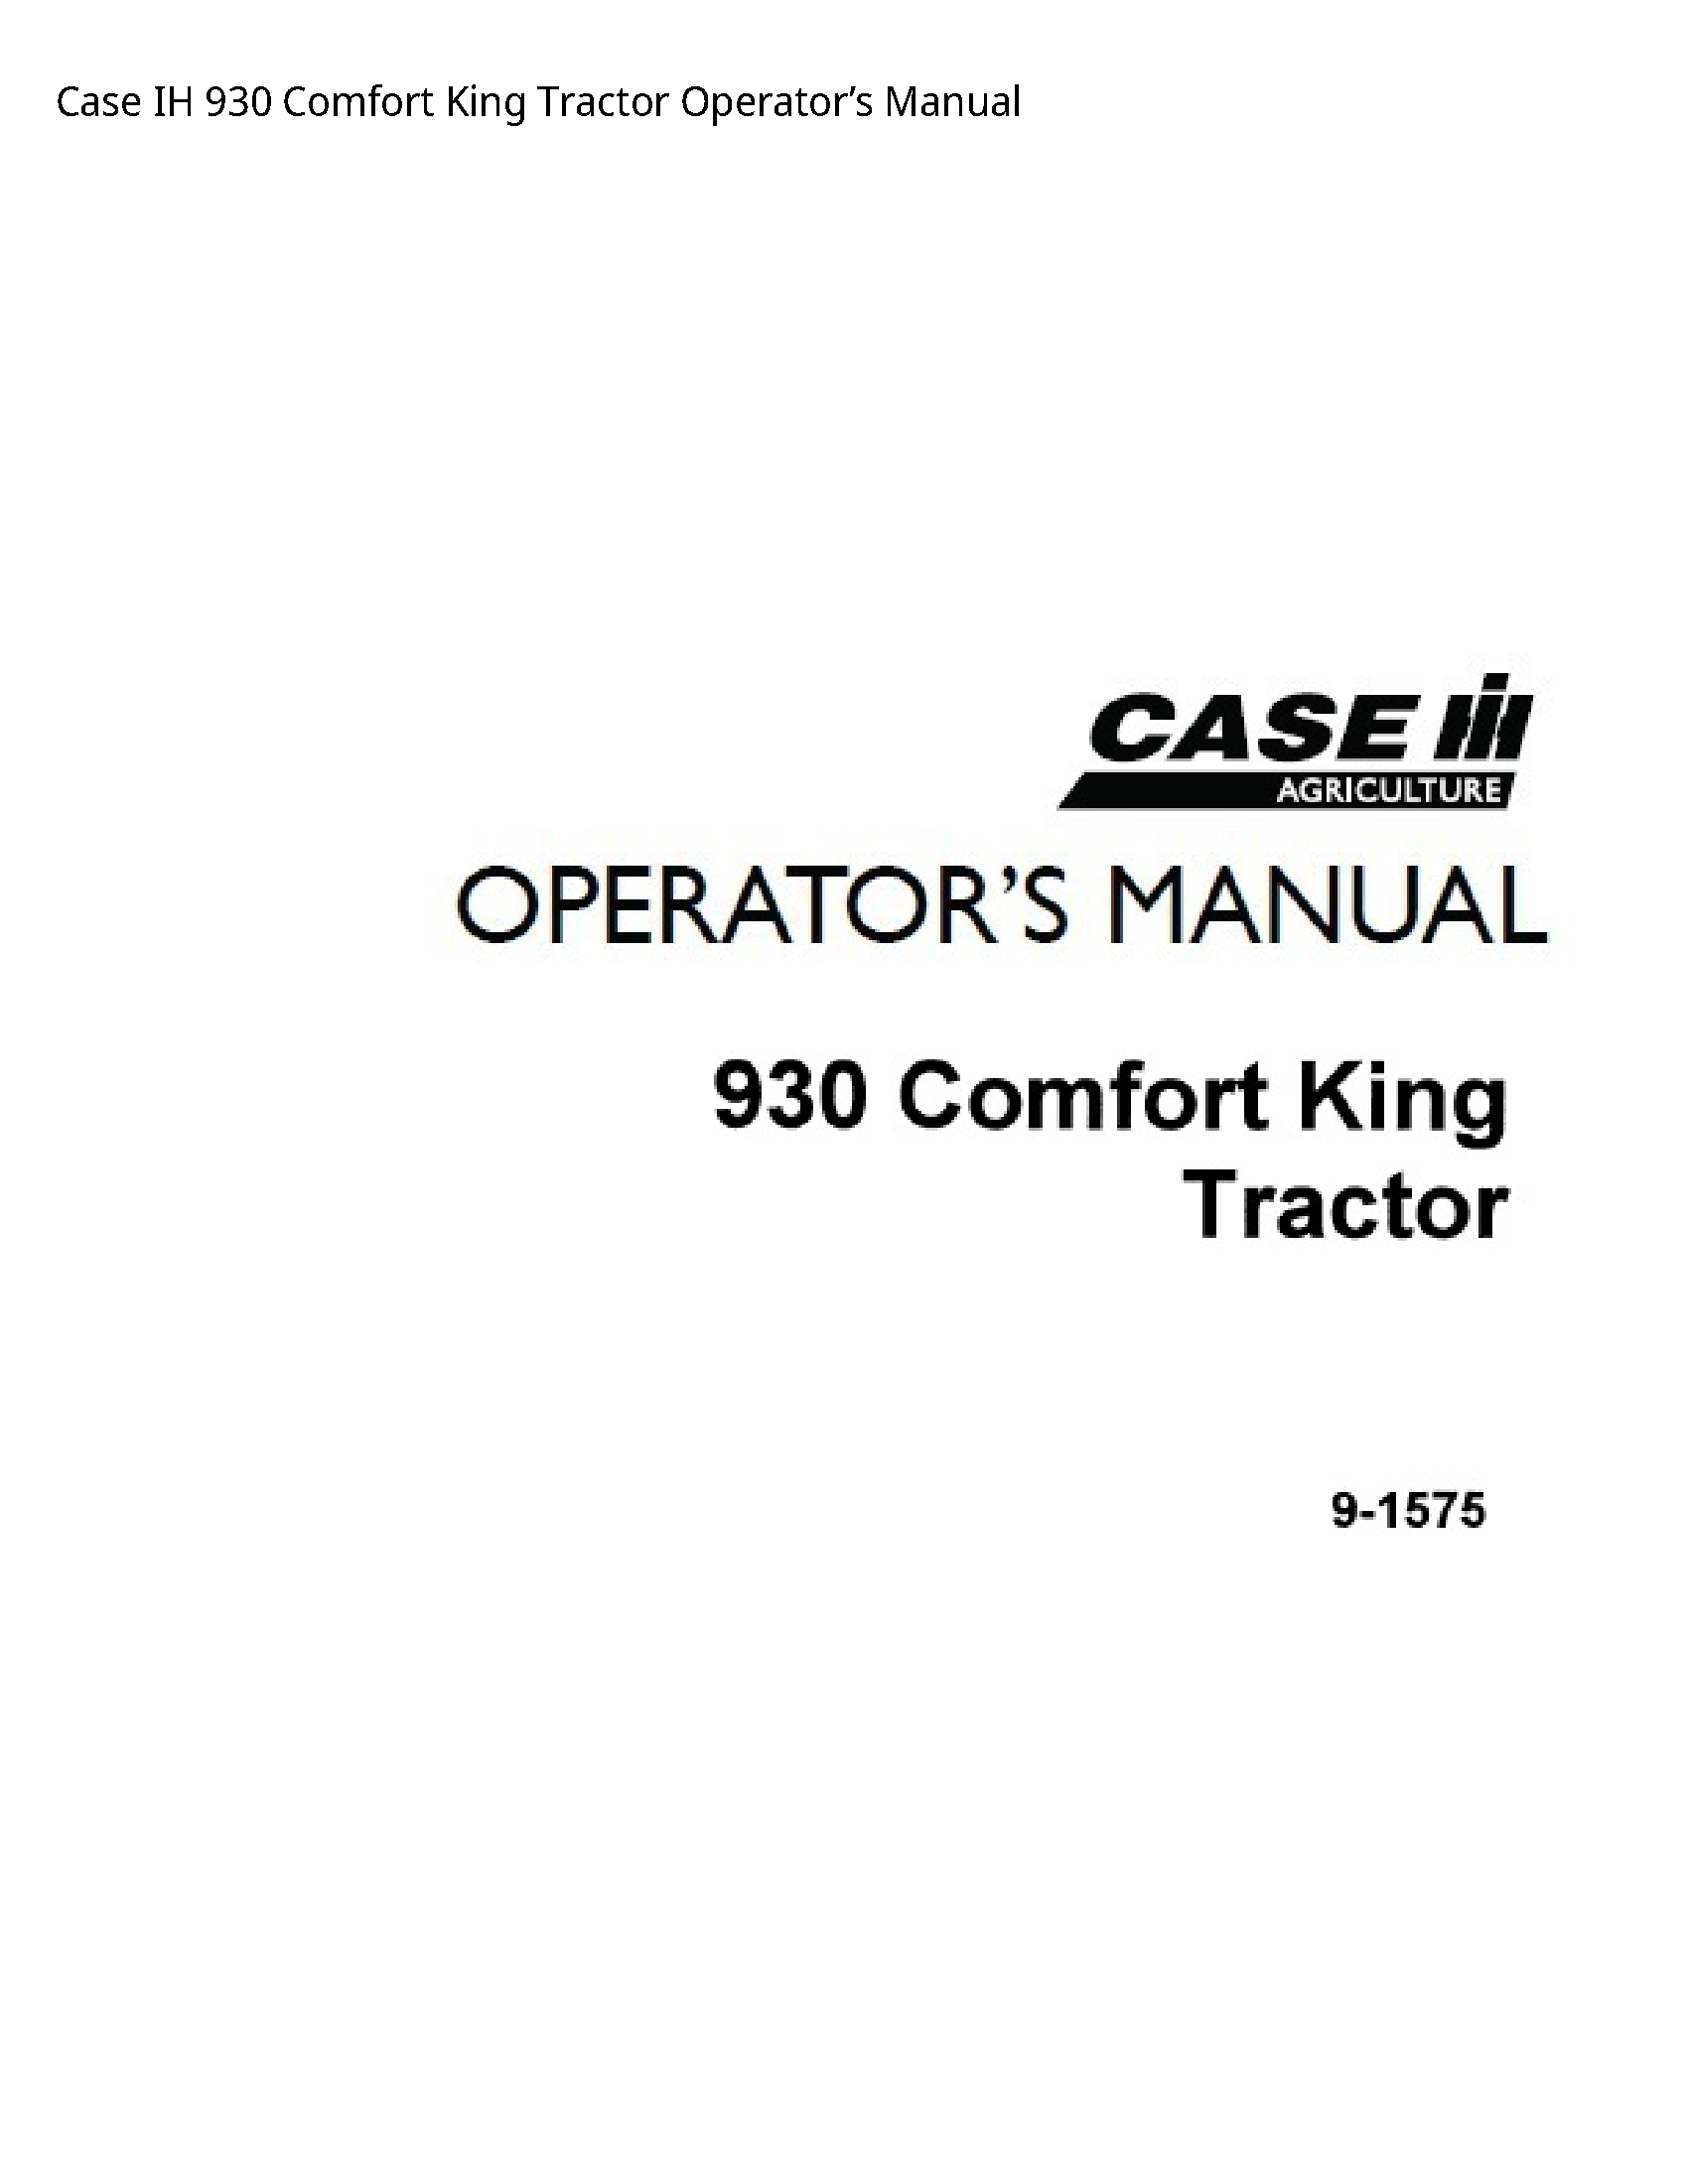 Case/Case IH 930 IH Comfort King Tractor Operator’s manual